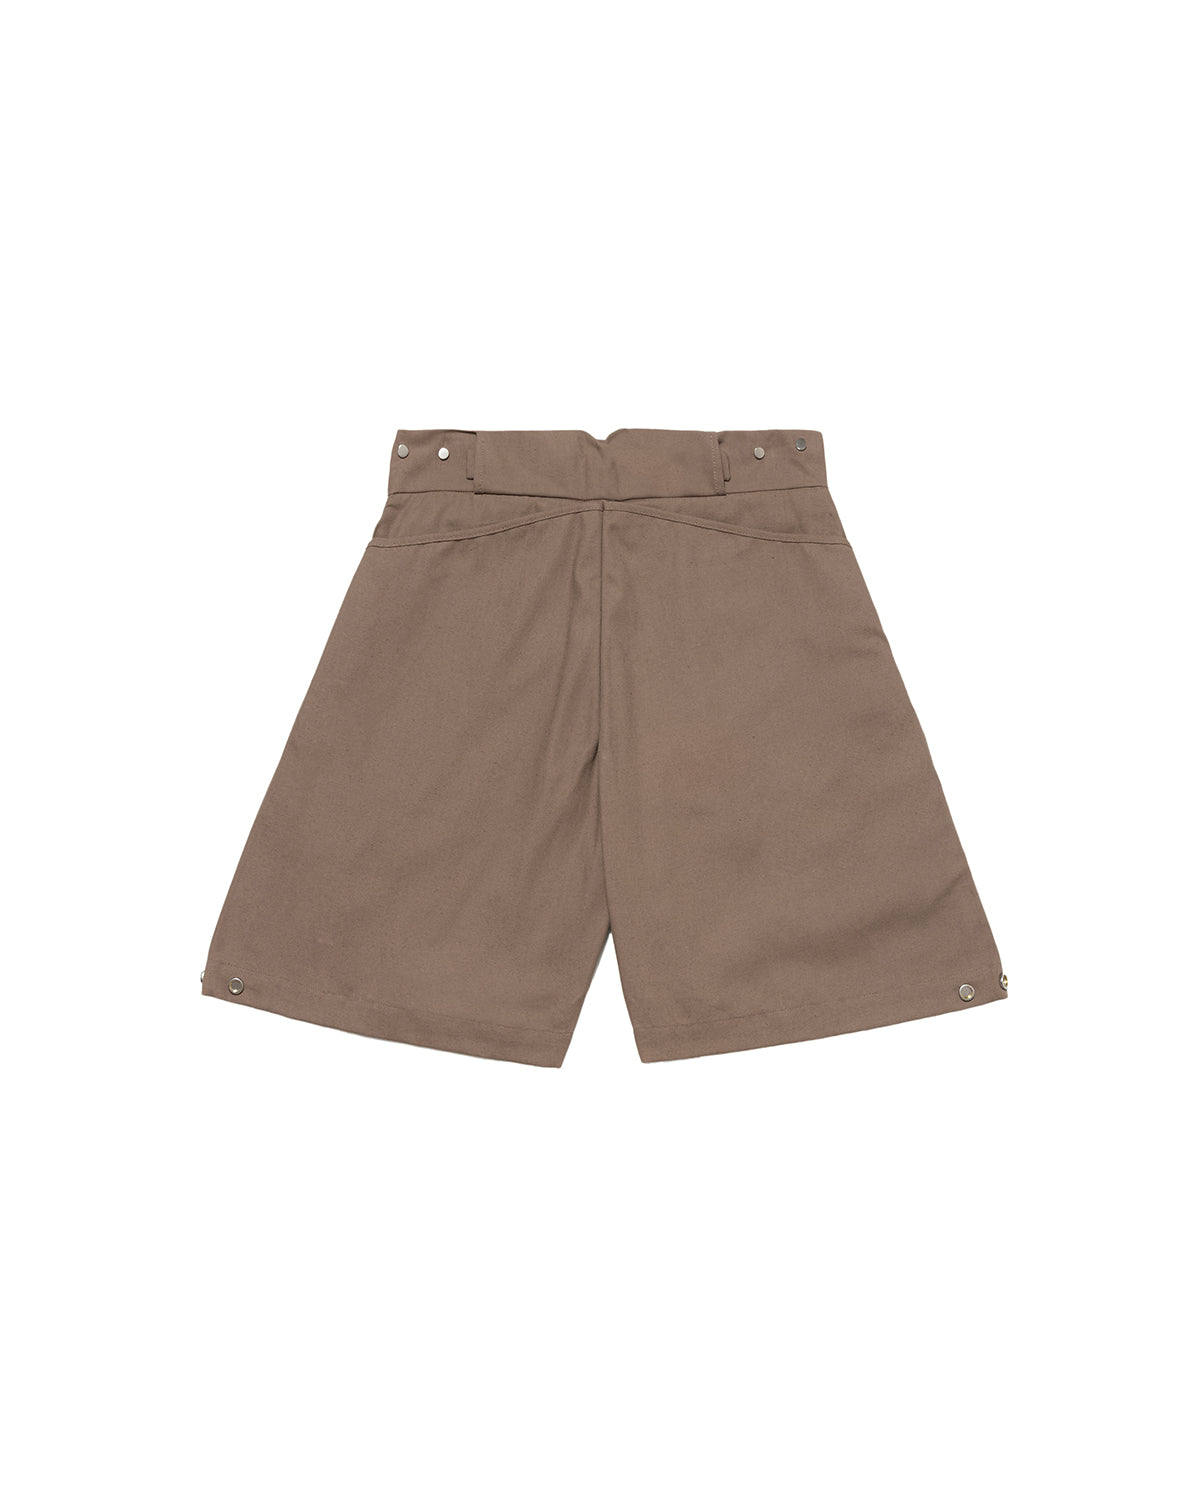 Ockham Brown Shorts